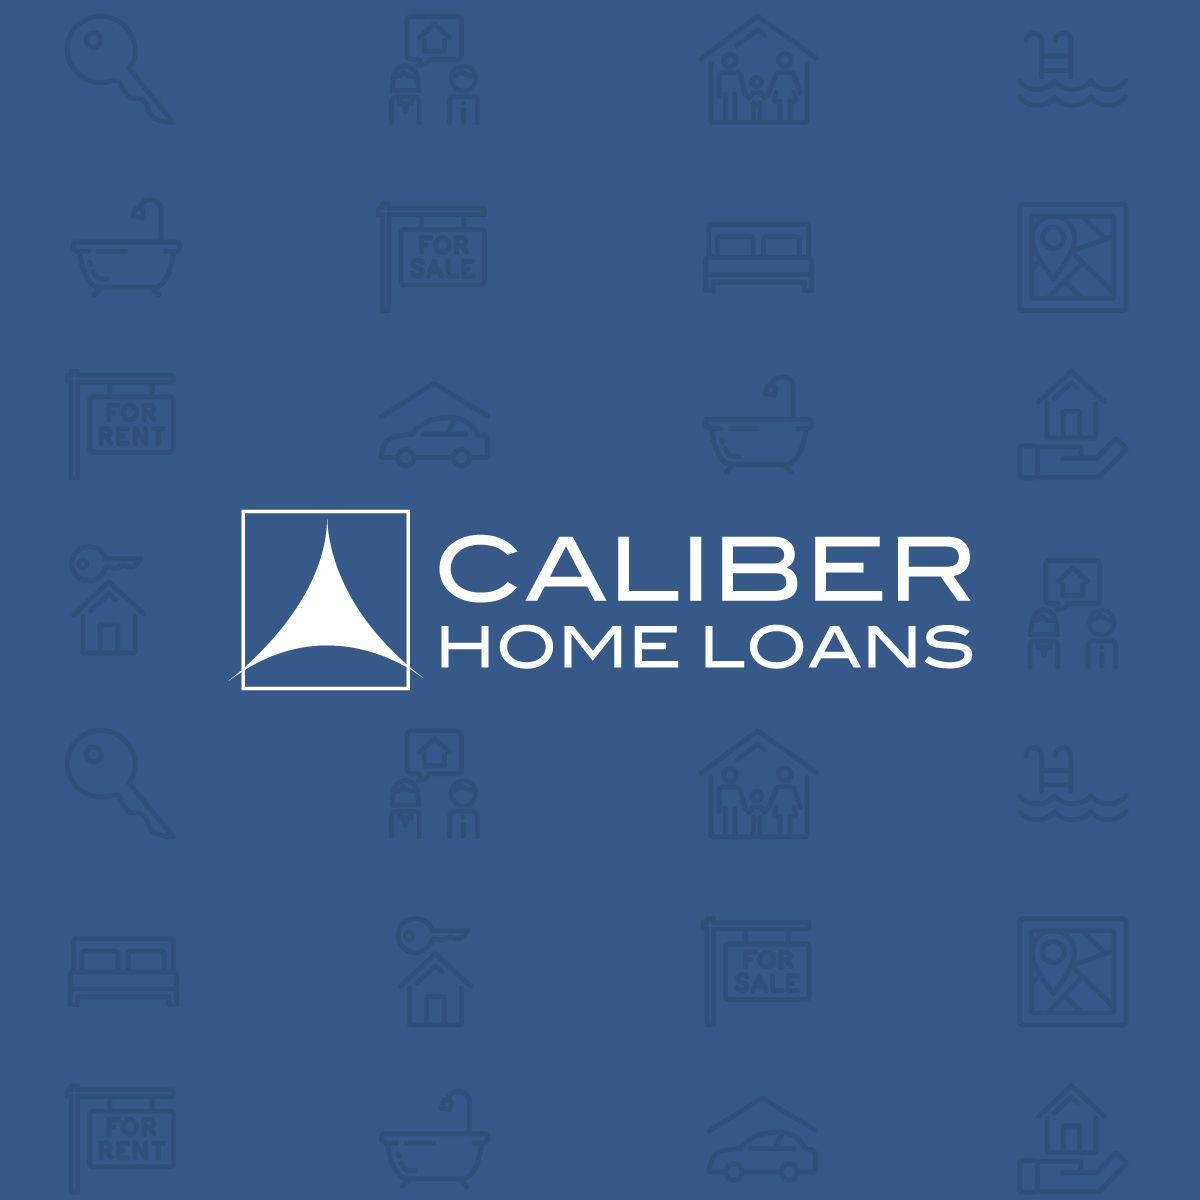 Bank of America Home Loans Logo - Caliber Home Loans, Inc. National Mortgage Lender